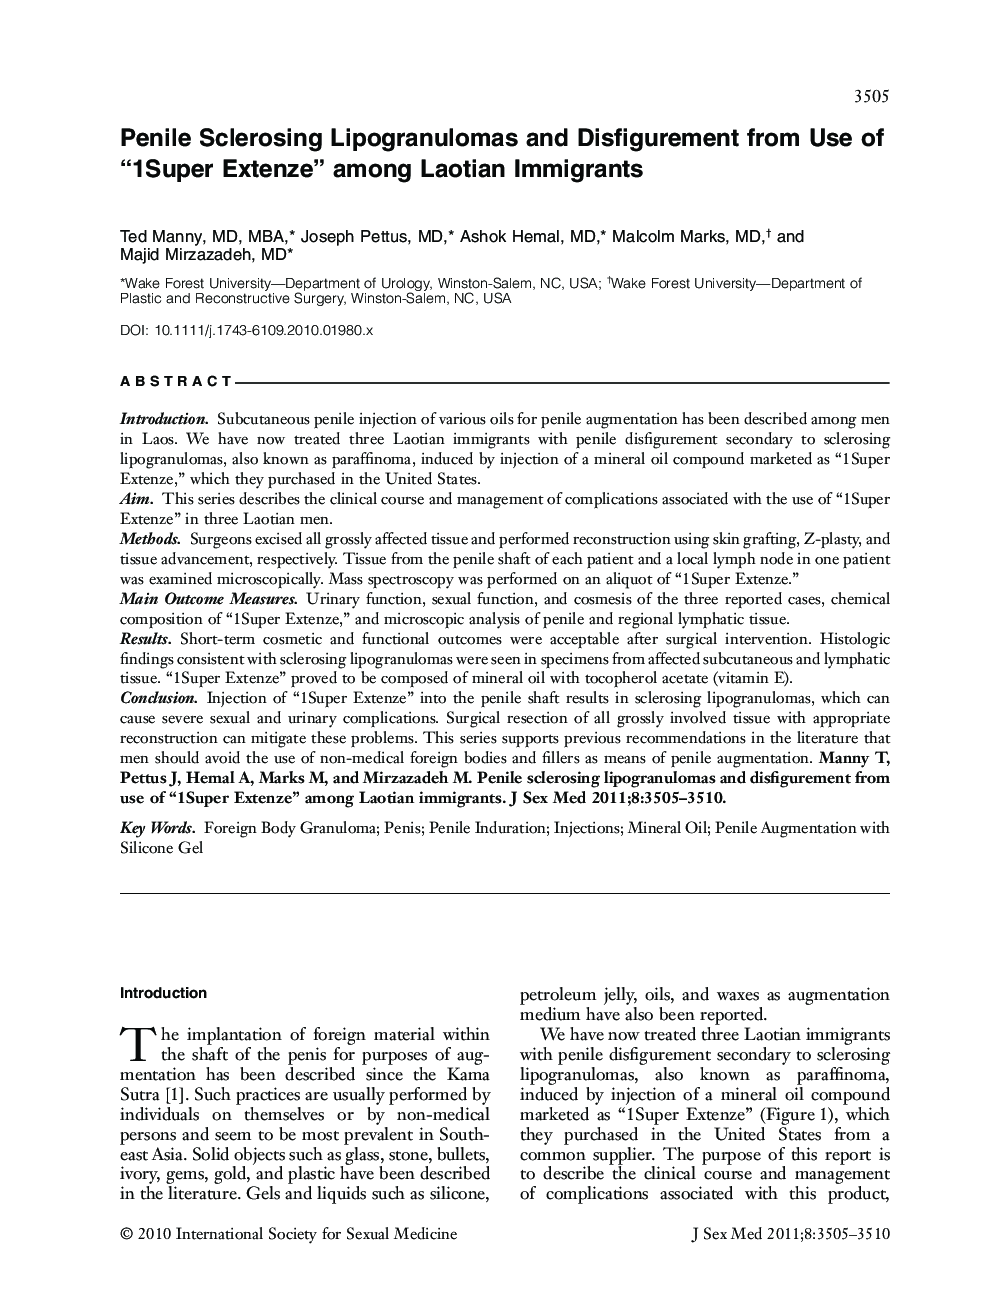 Penile Sclerosing Lipogranulomas and Disfigurement from Use of “1Super Extenze” among Laotian Immigrants